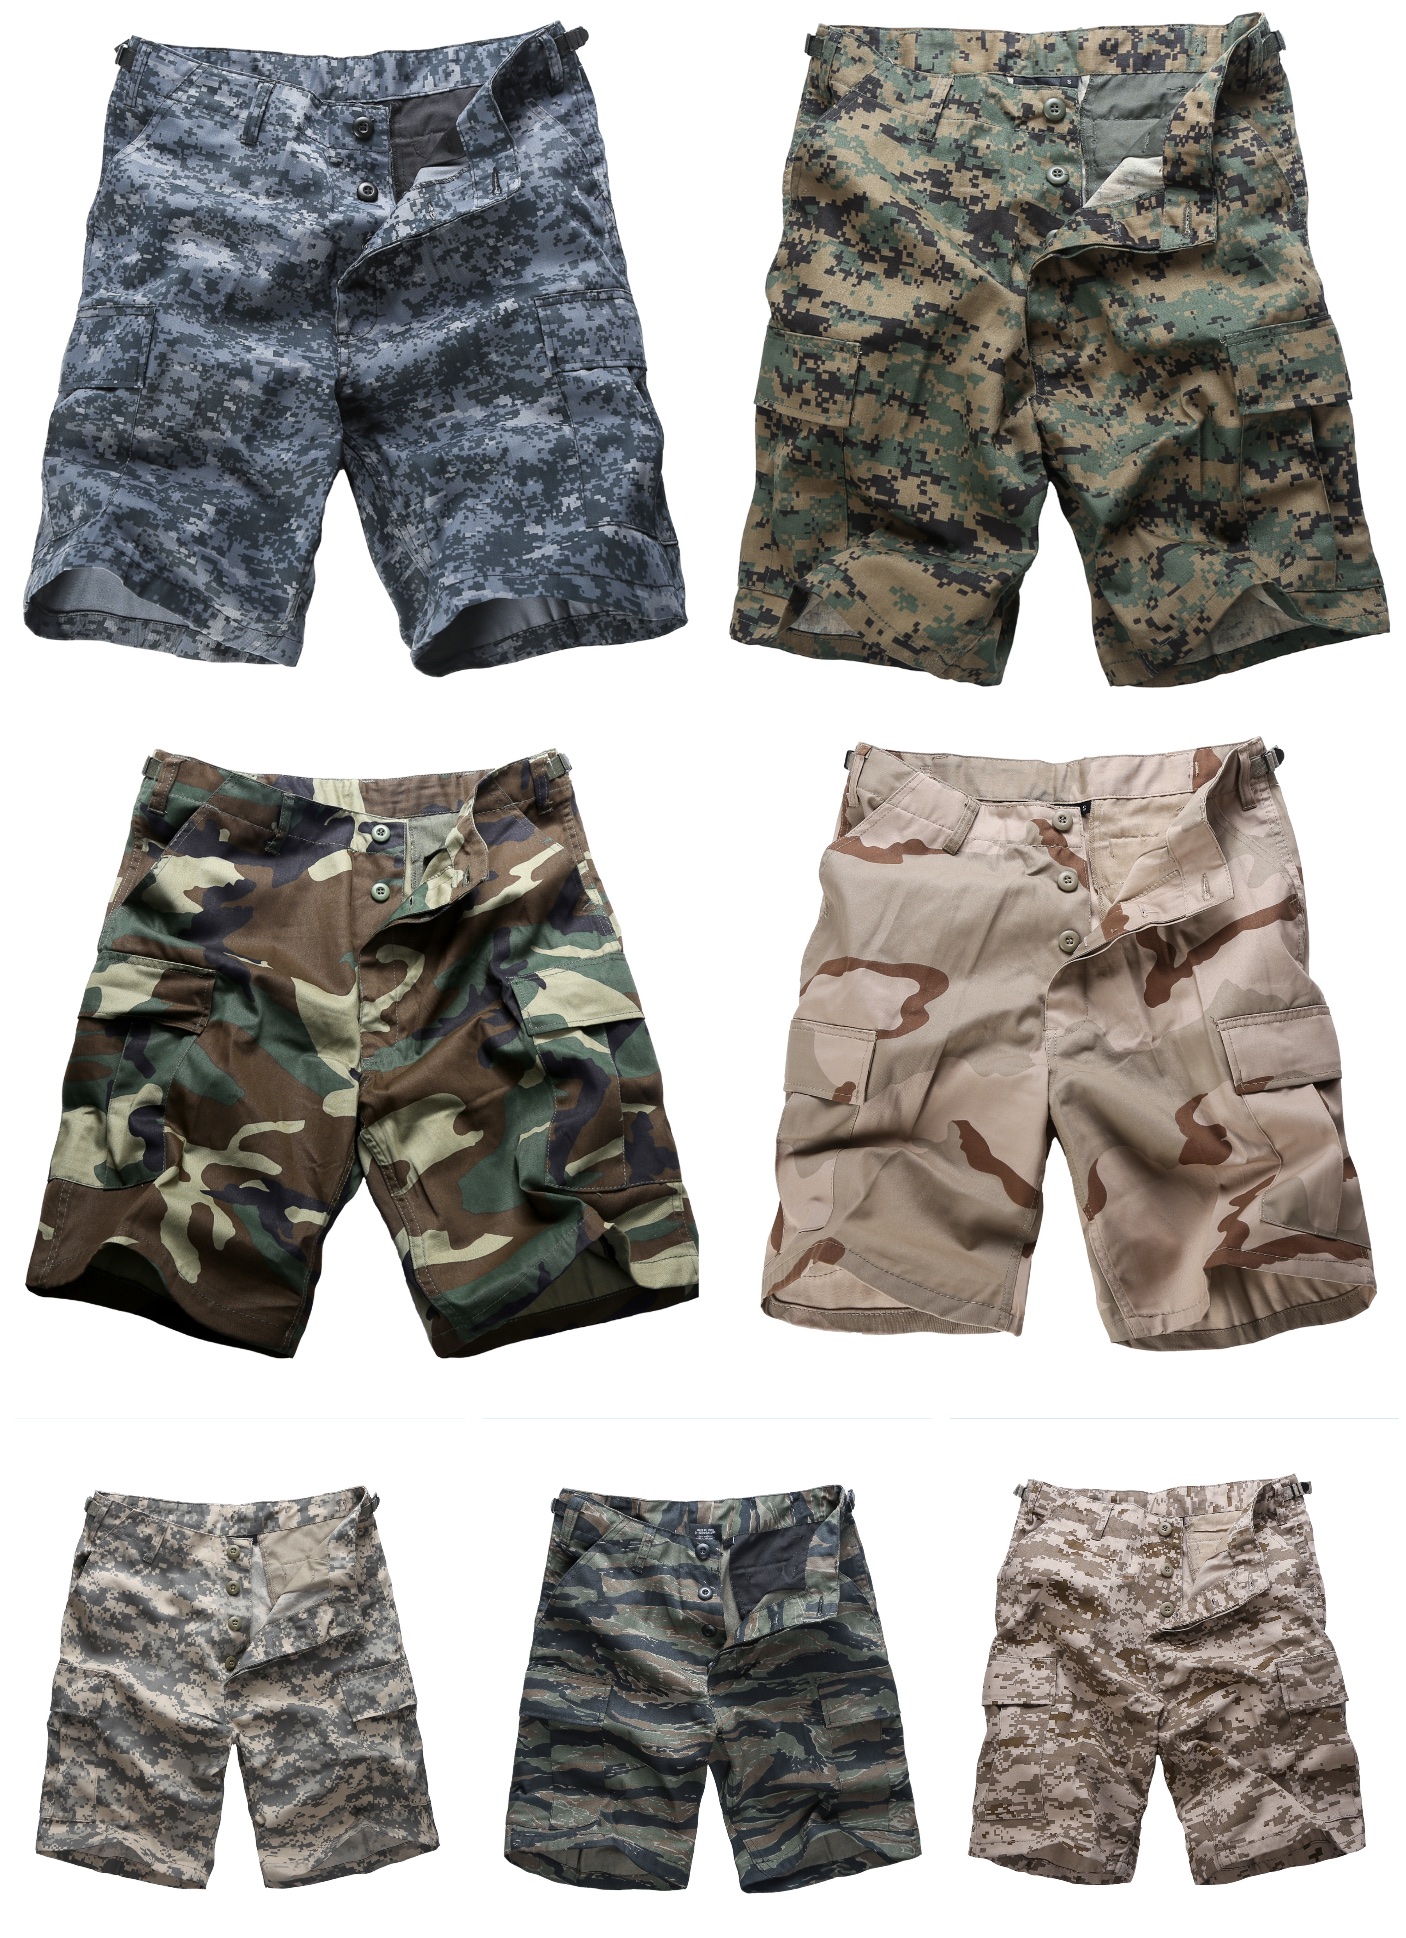 Mens Army Military Combat Style Camo Shorts Fashion Casual Cargo Shorts ...